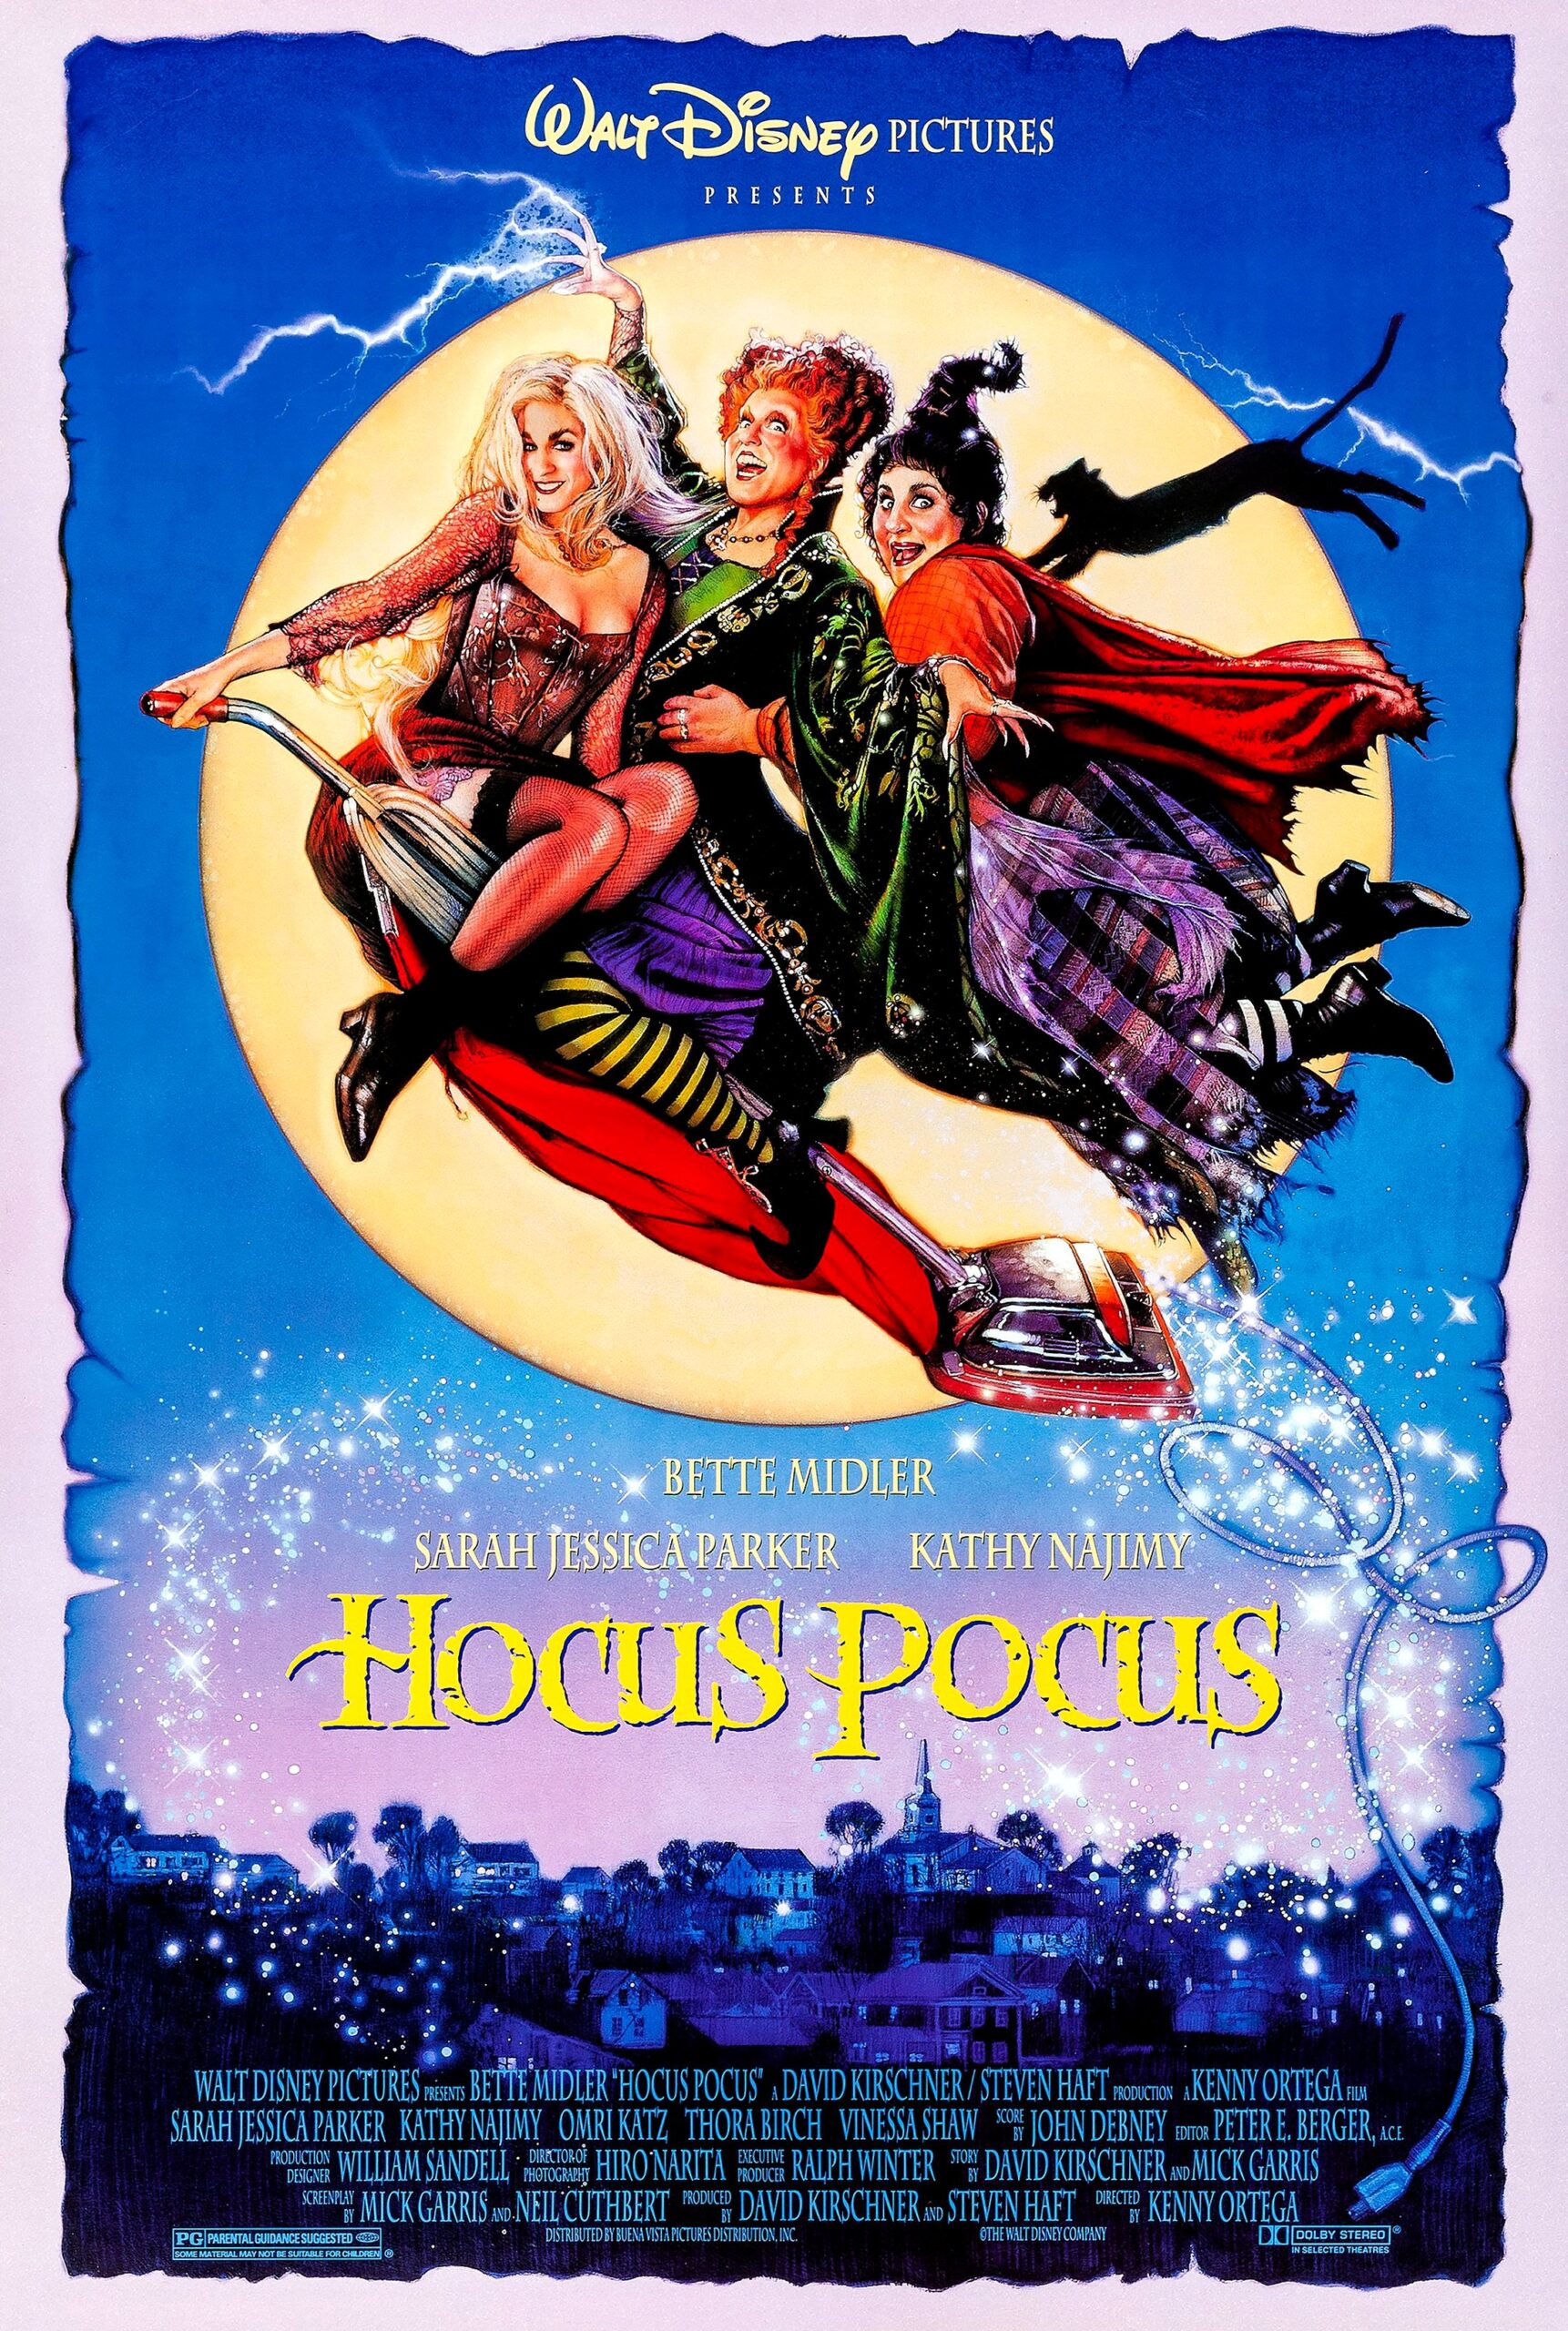 Bette Midler, Sarah Jessica Parker, and Kathy Najimy in Hocus Pocus (1993)